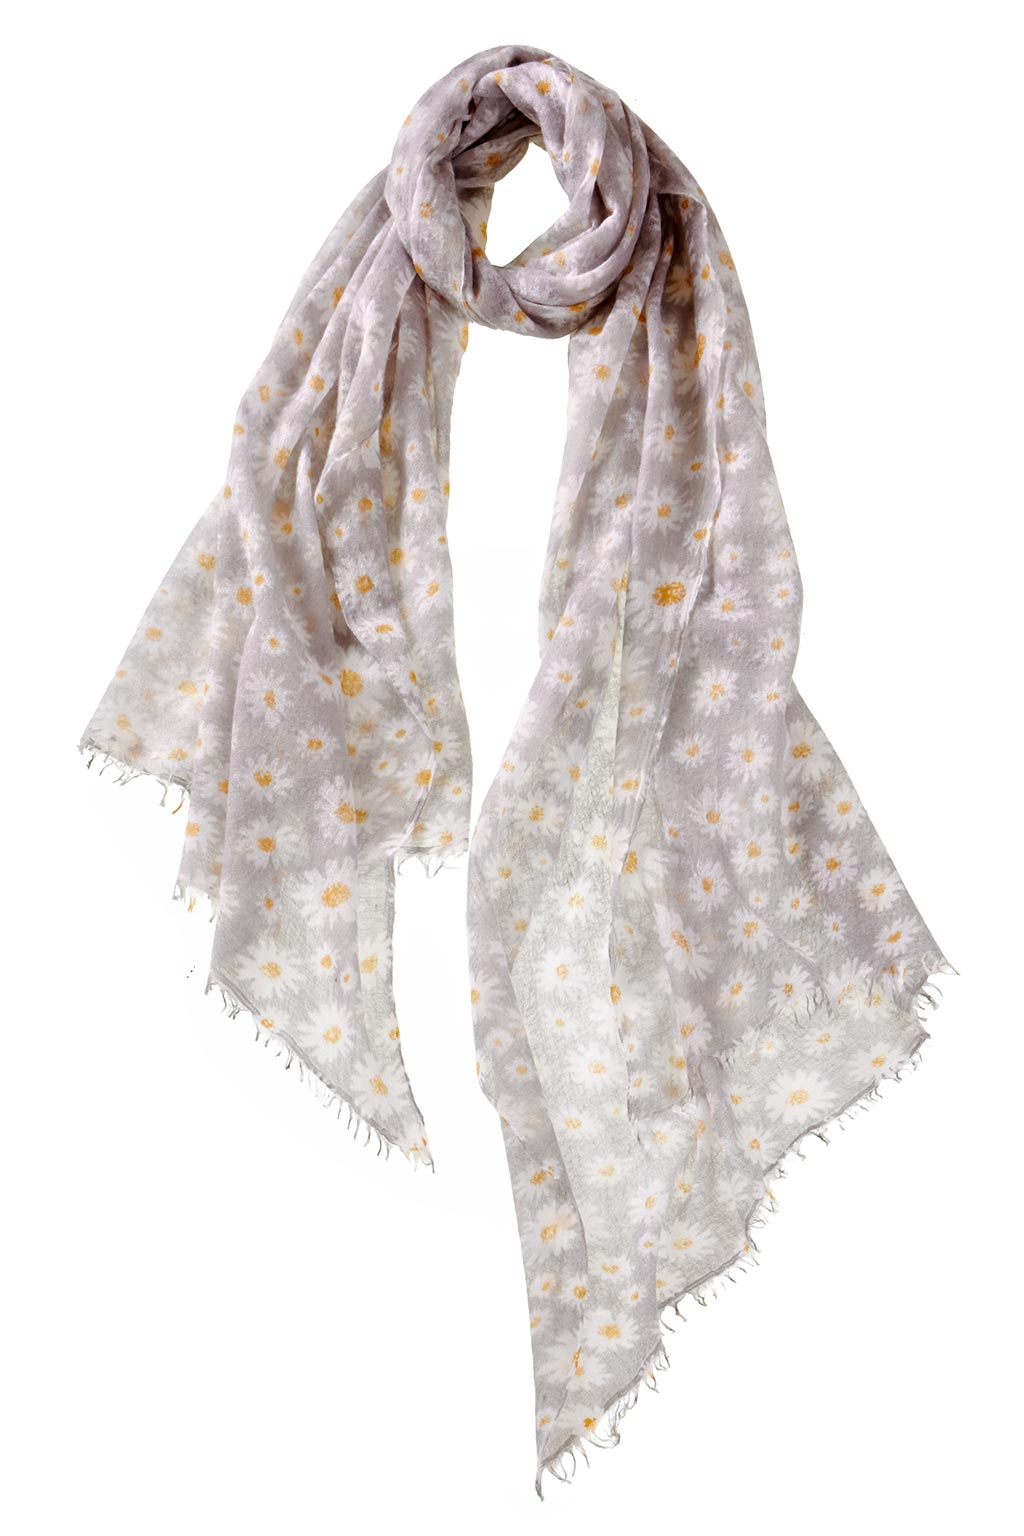 Alpine Cashmere daisy print scarf in pearl gray